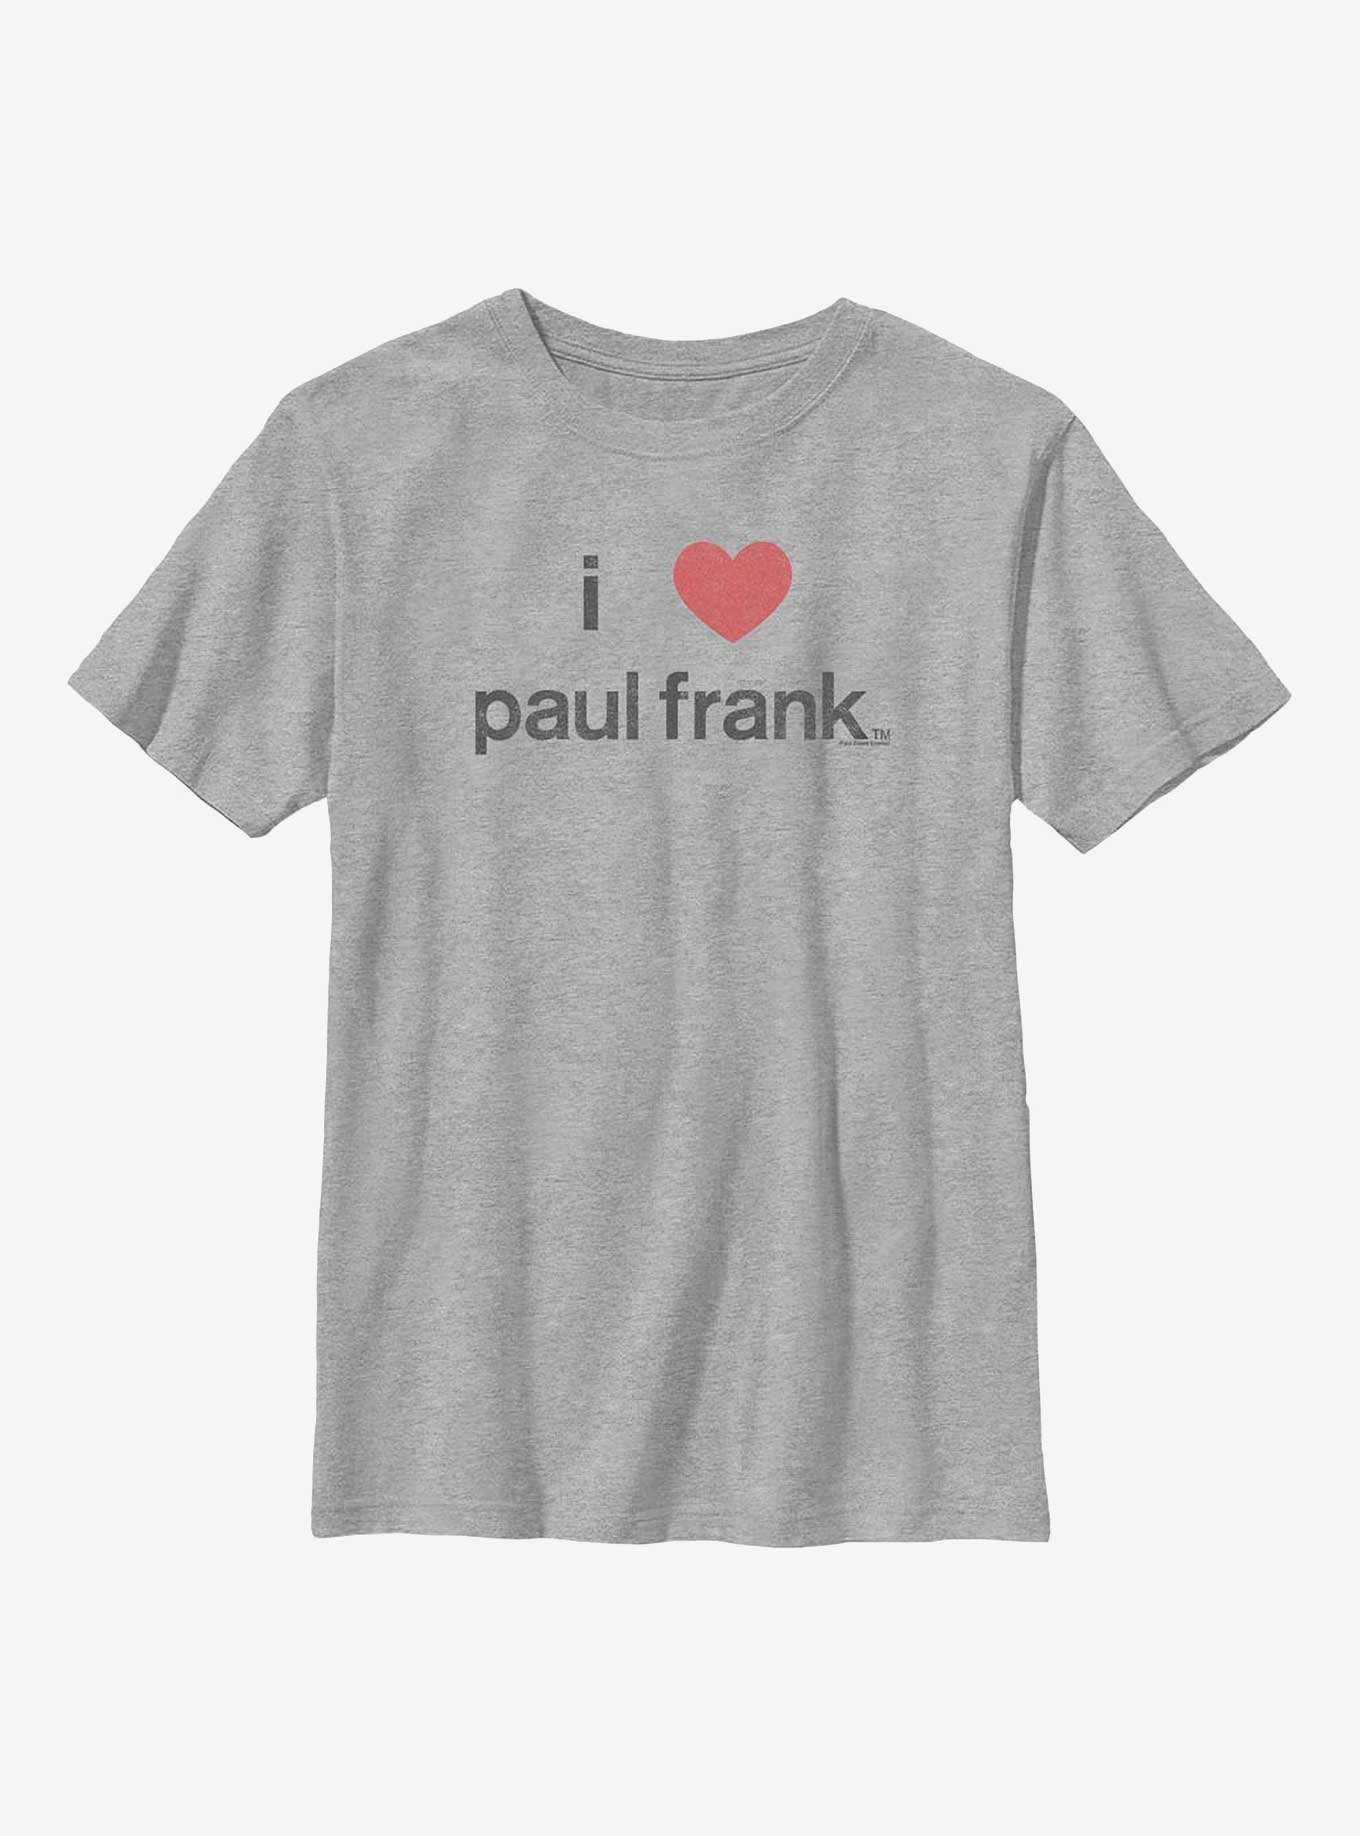 Paul Frank I Heart Paul Frank Youth T-Shirt, , hi-res